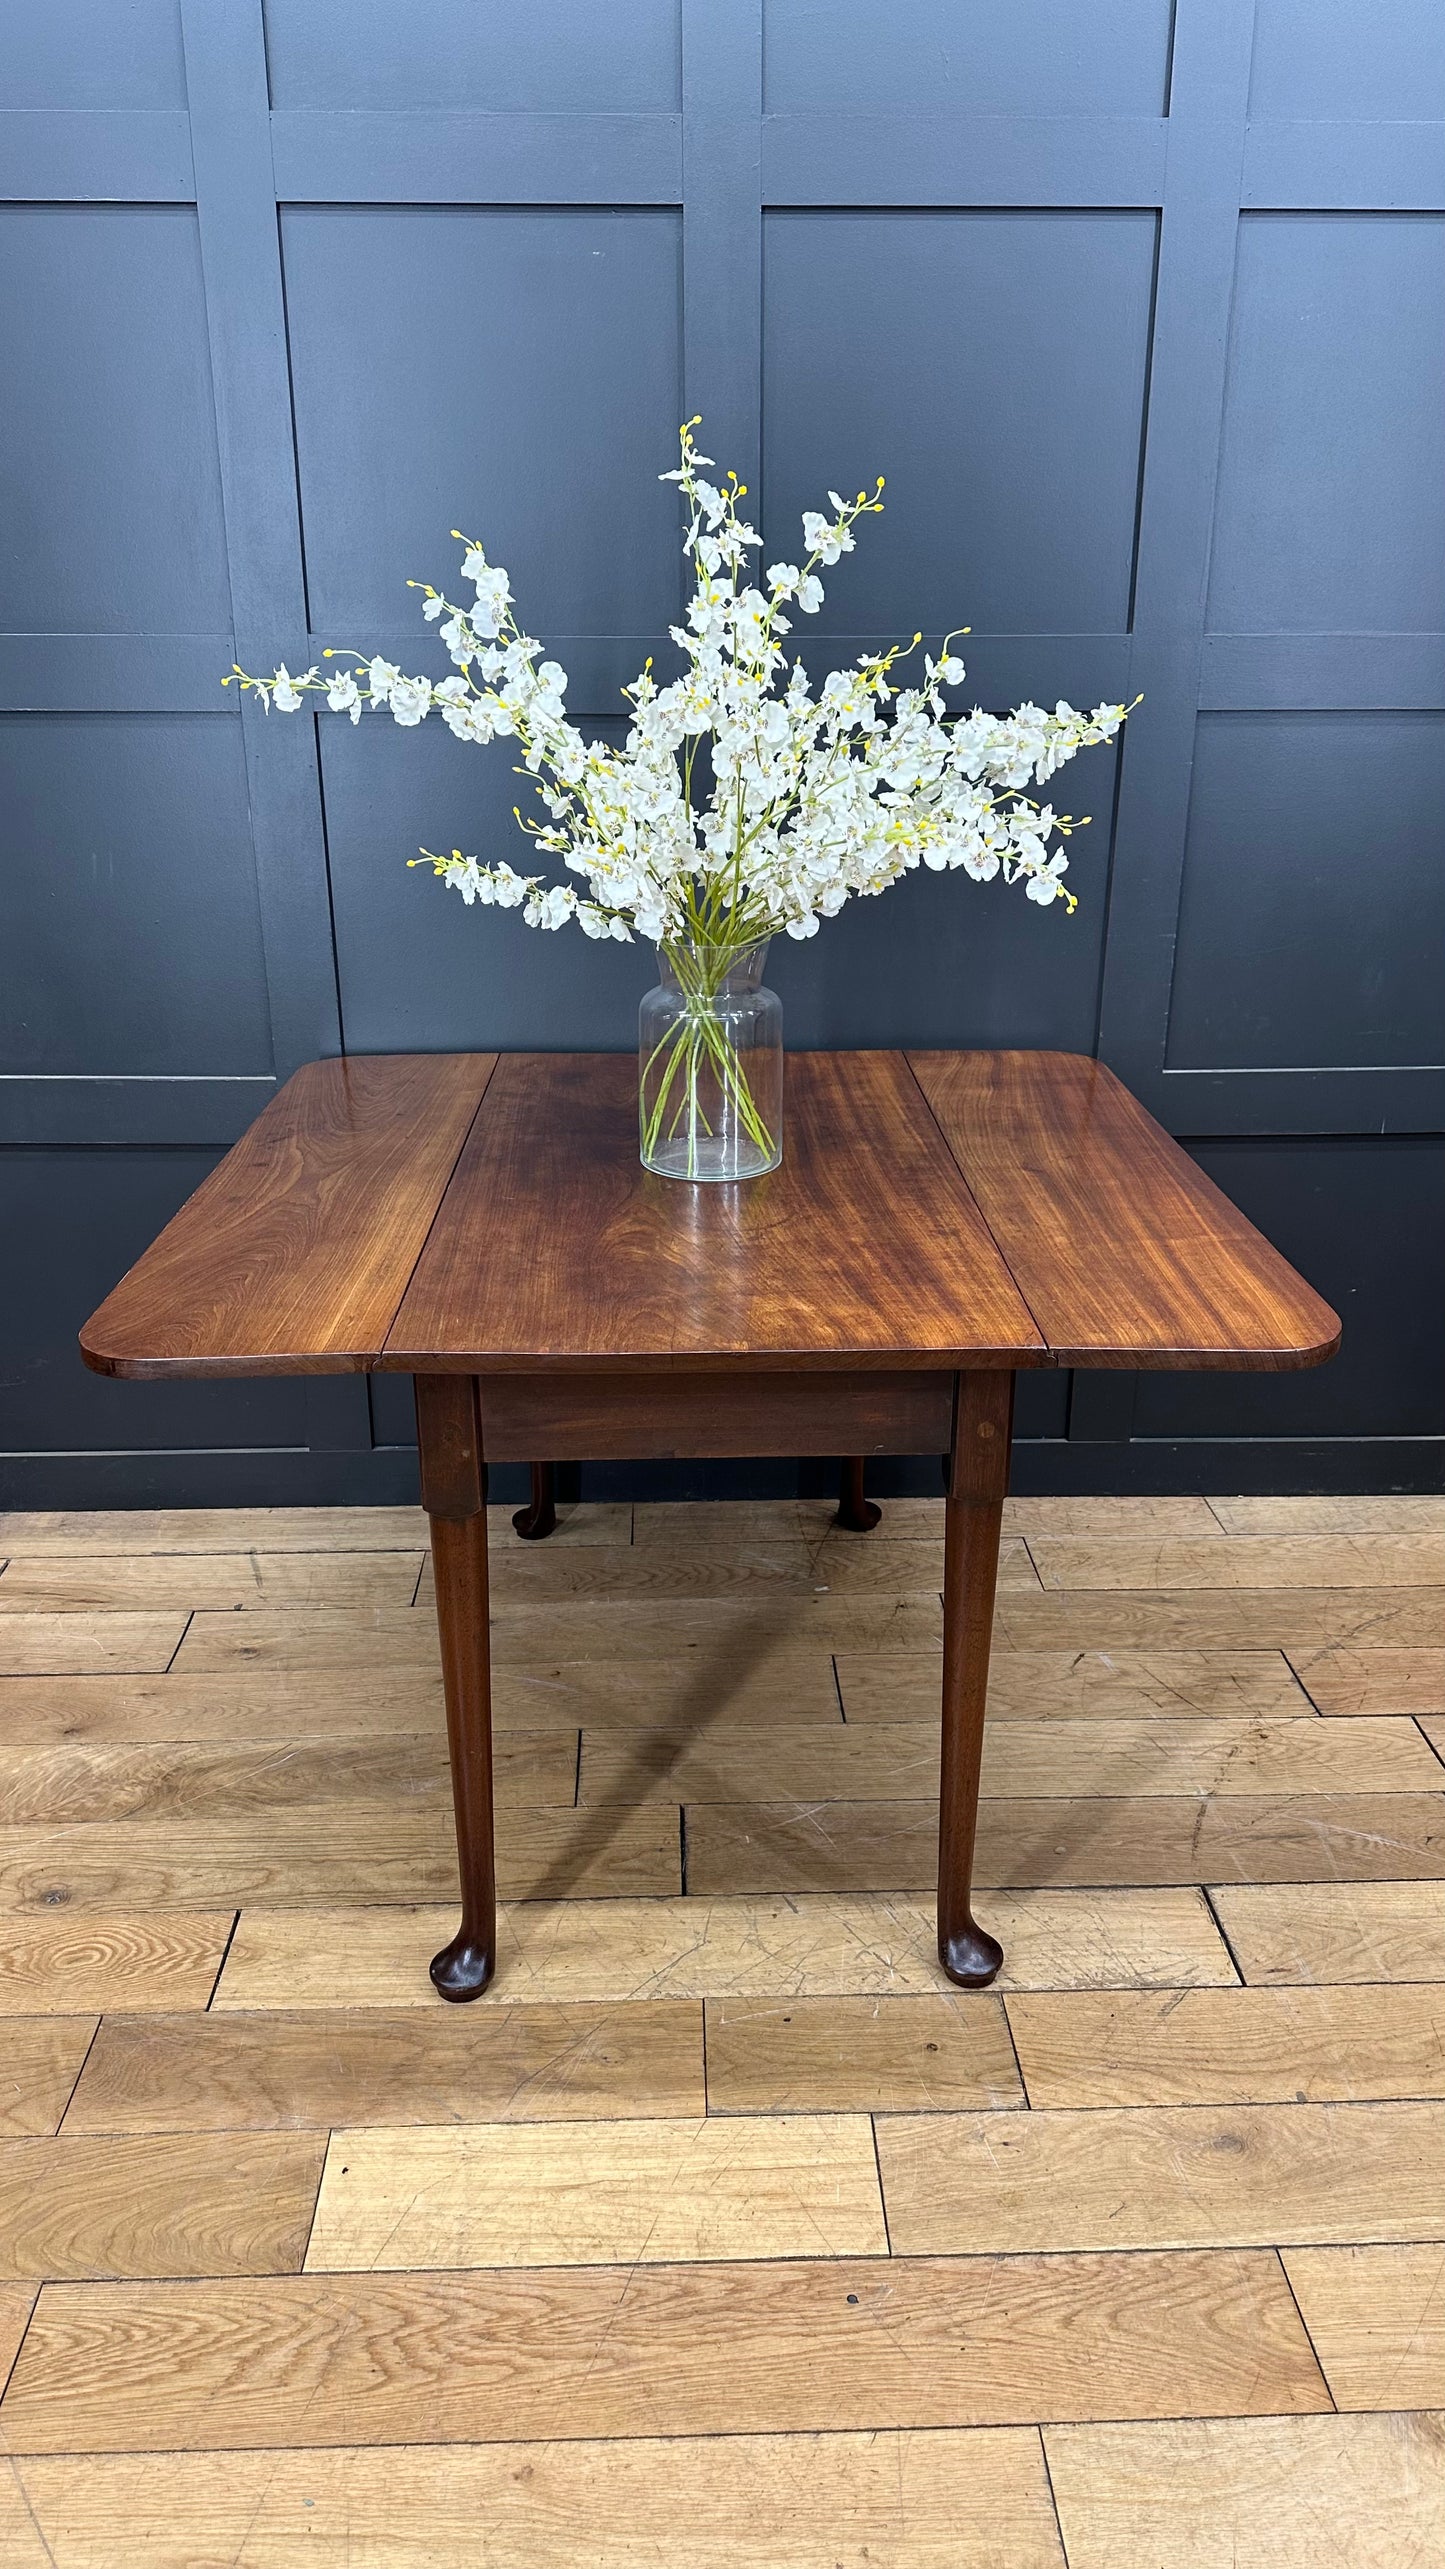 Antique Georgian Mahogany Pembroke Table / Drop Leaf Extending Table /Sideboard